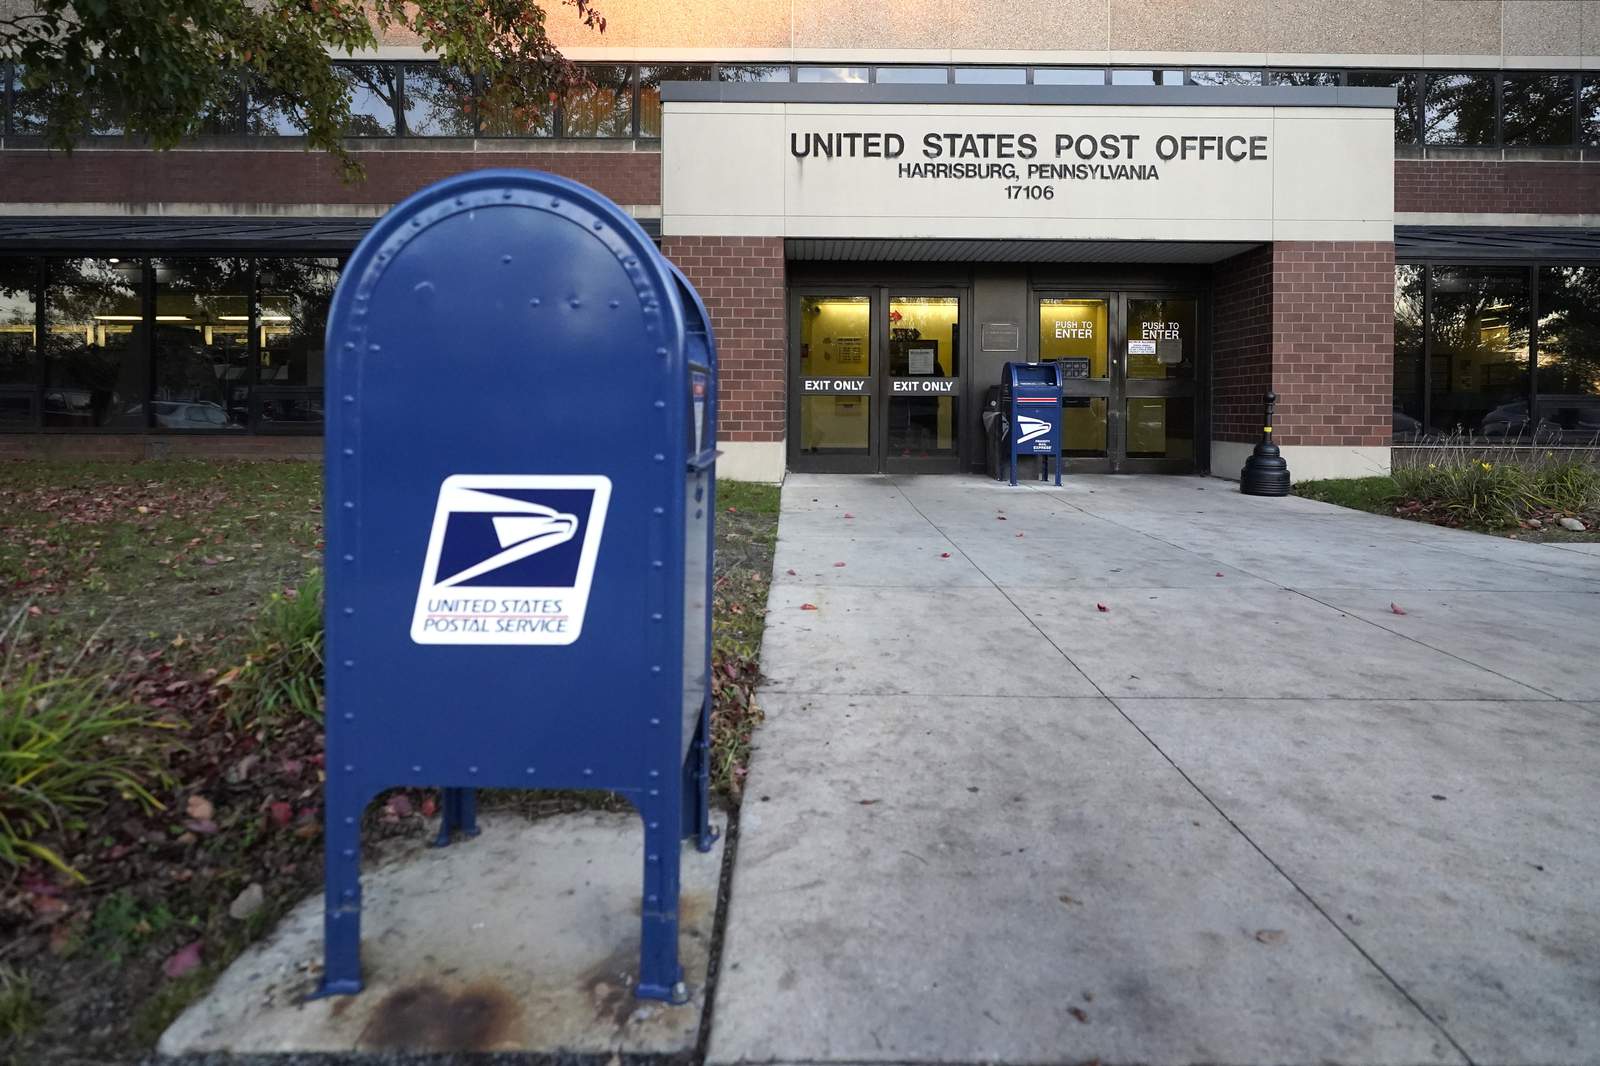 After judge's order, Postal Service sweep finds 13 ballots